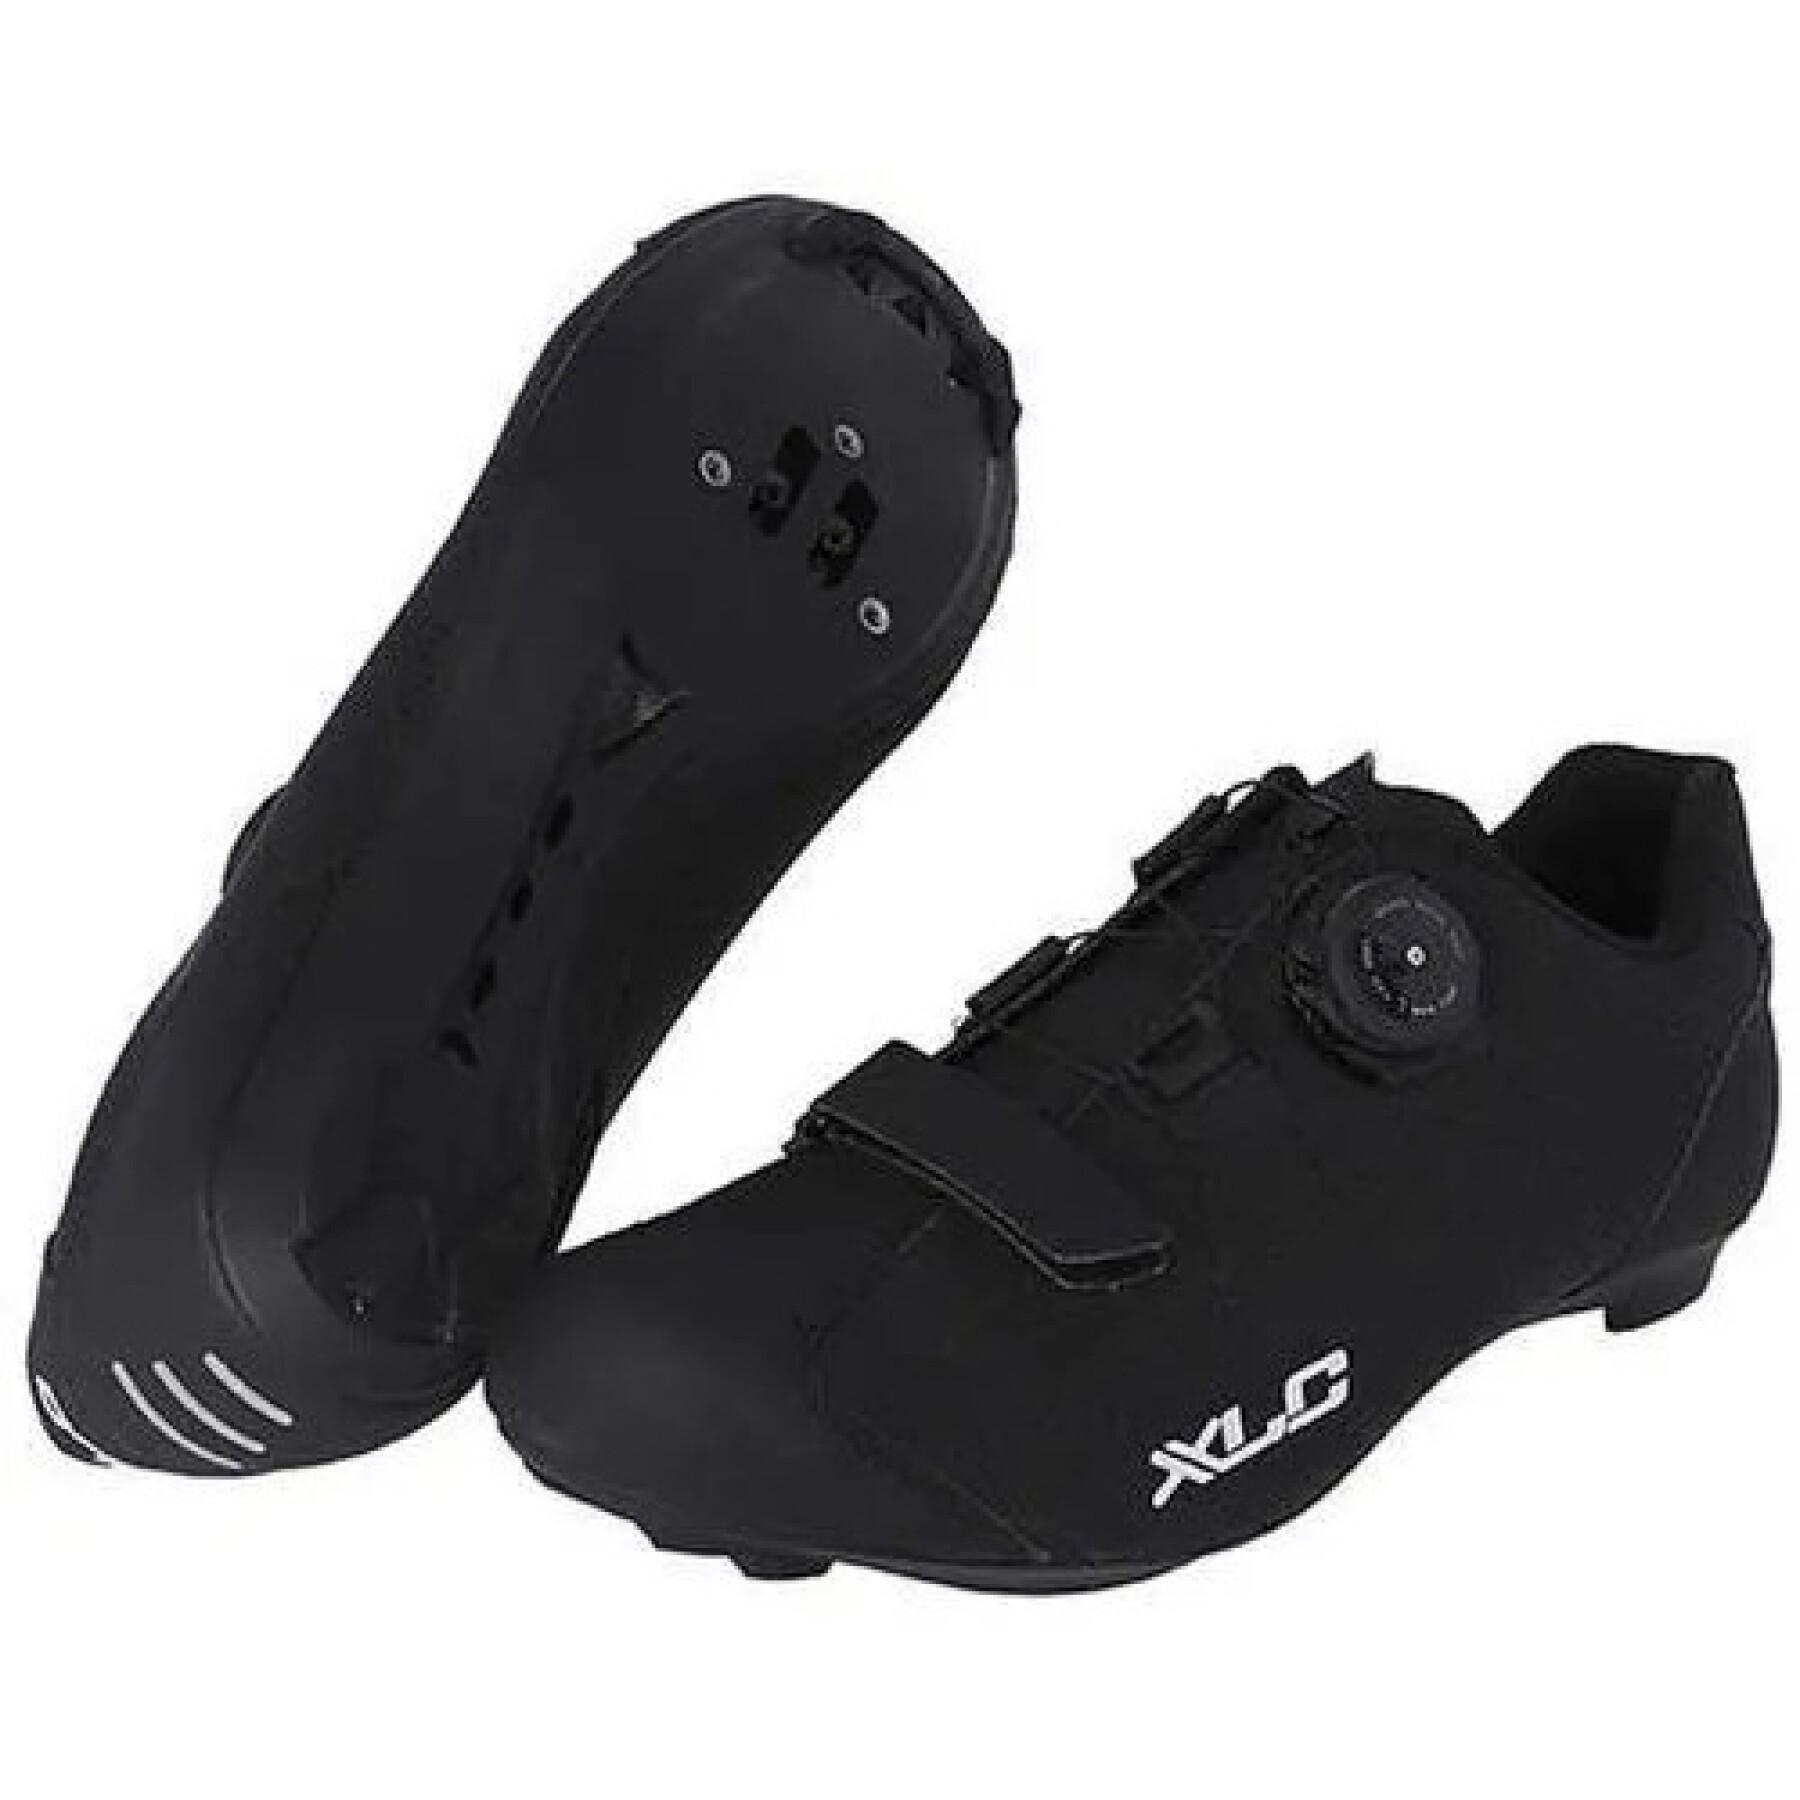 Road shoes XLC cb-r09